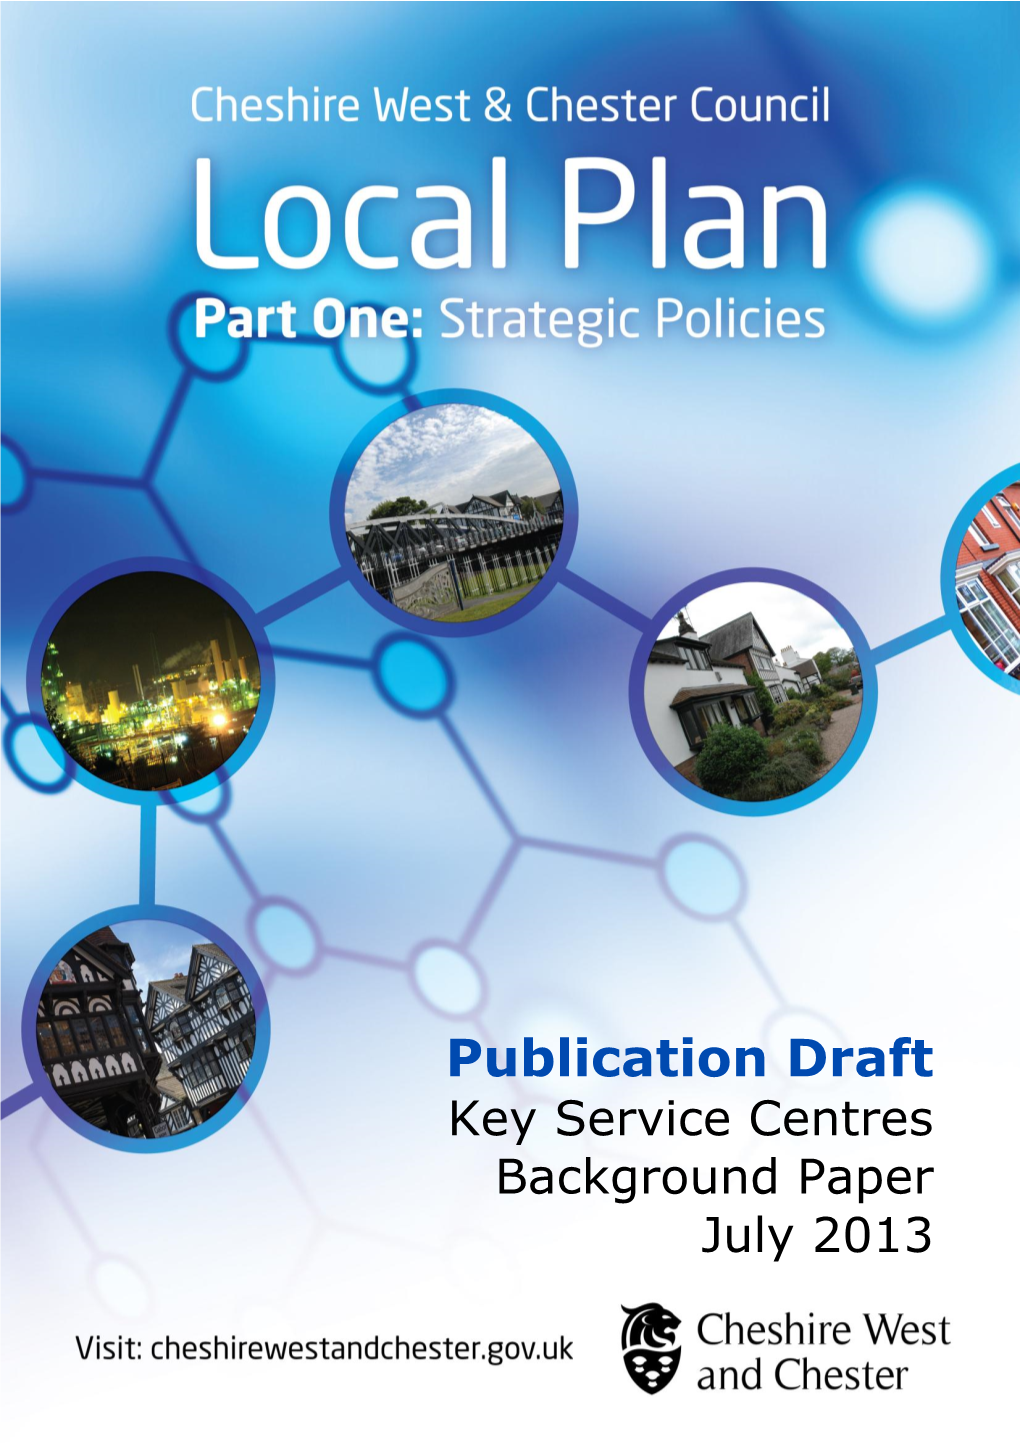 Key Service Centres Background Paper July 2013